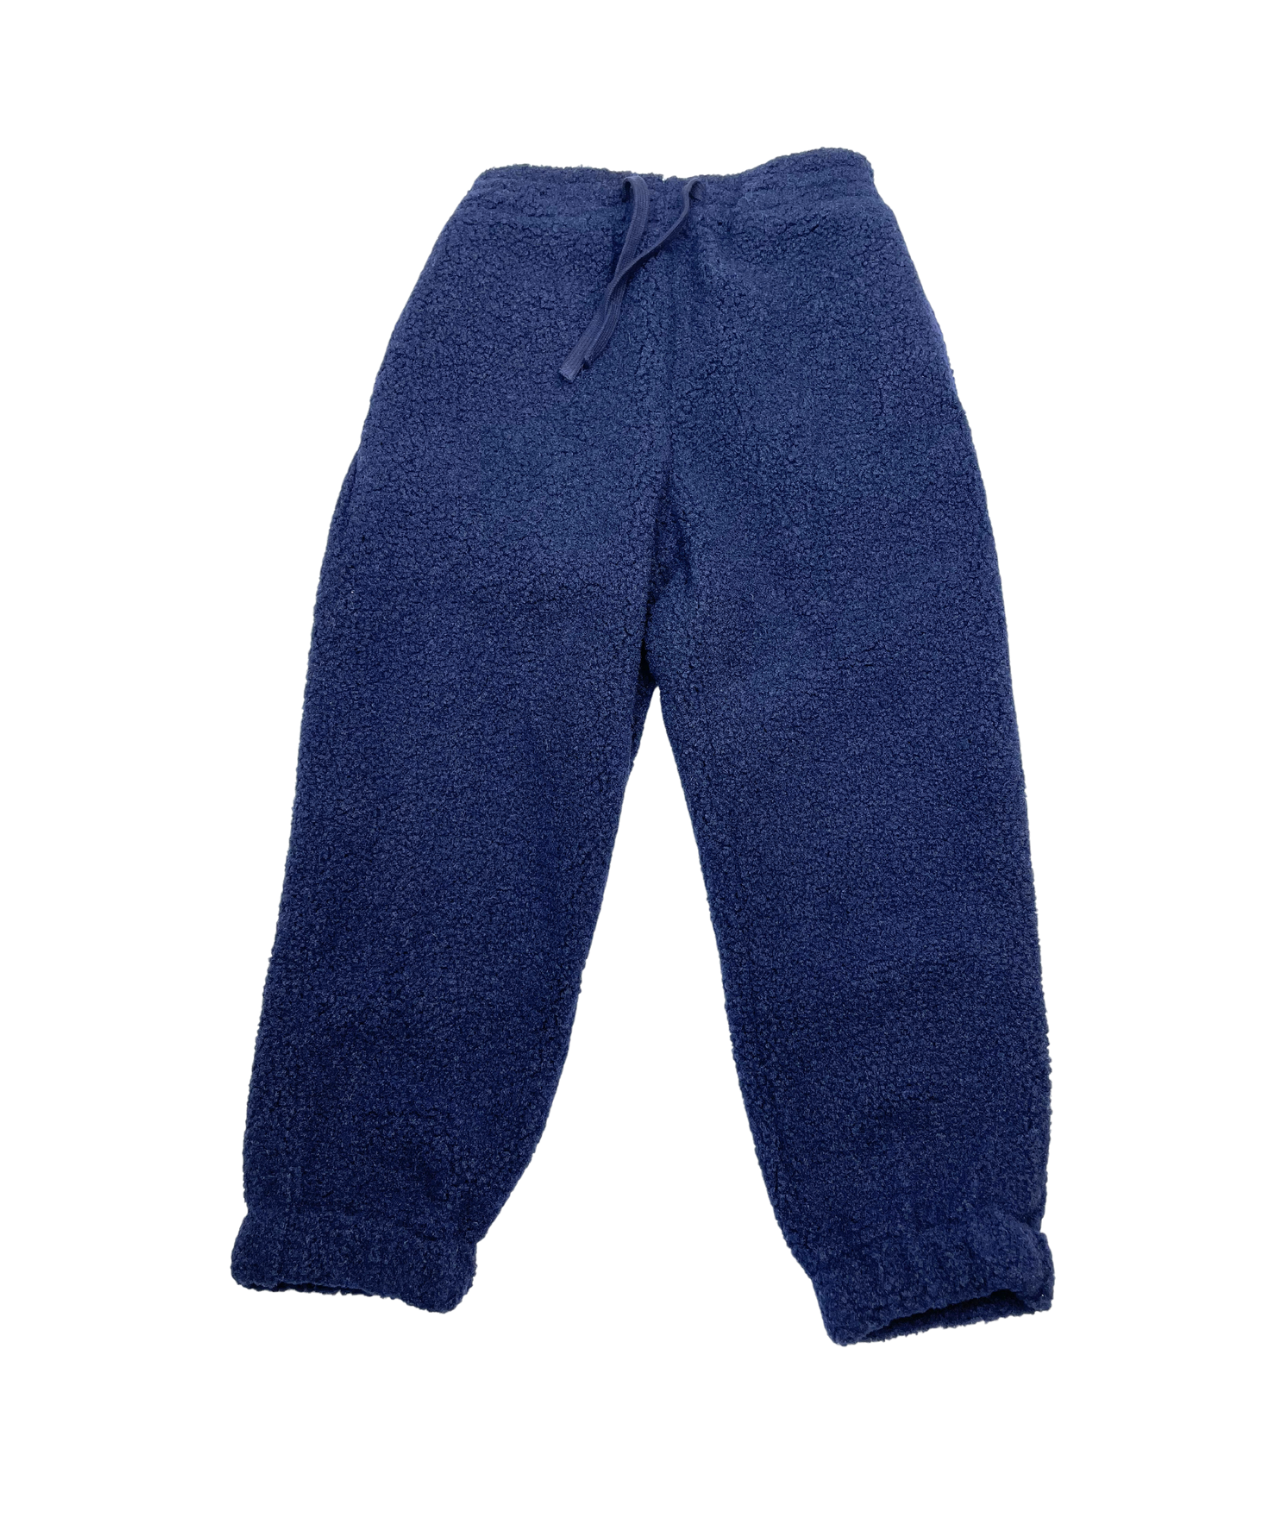 FINGER IN THE NOSE - Pantalon moumoute bleu - 10/11 ans